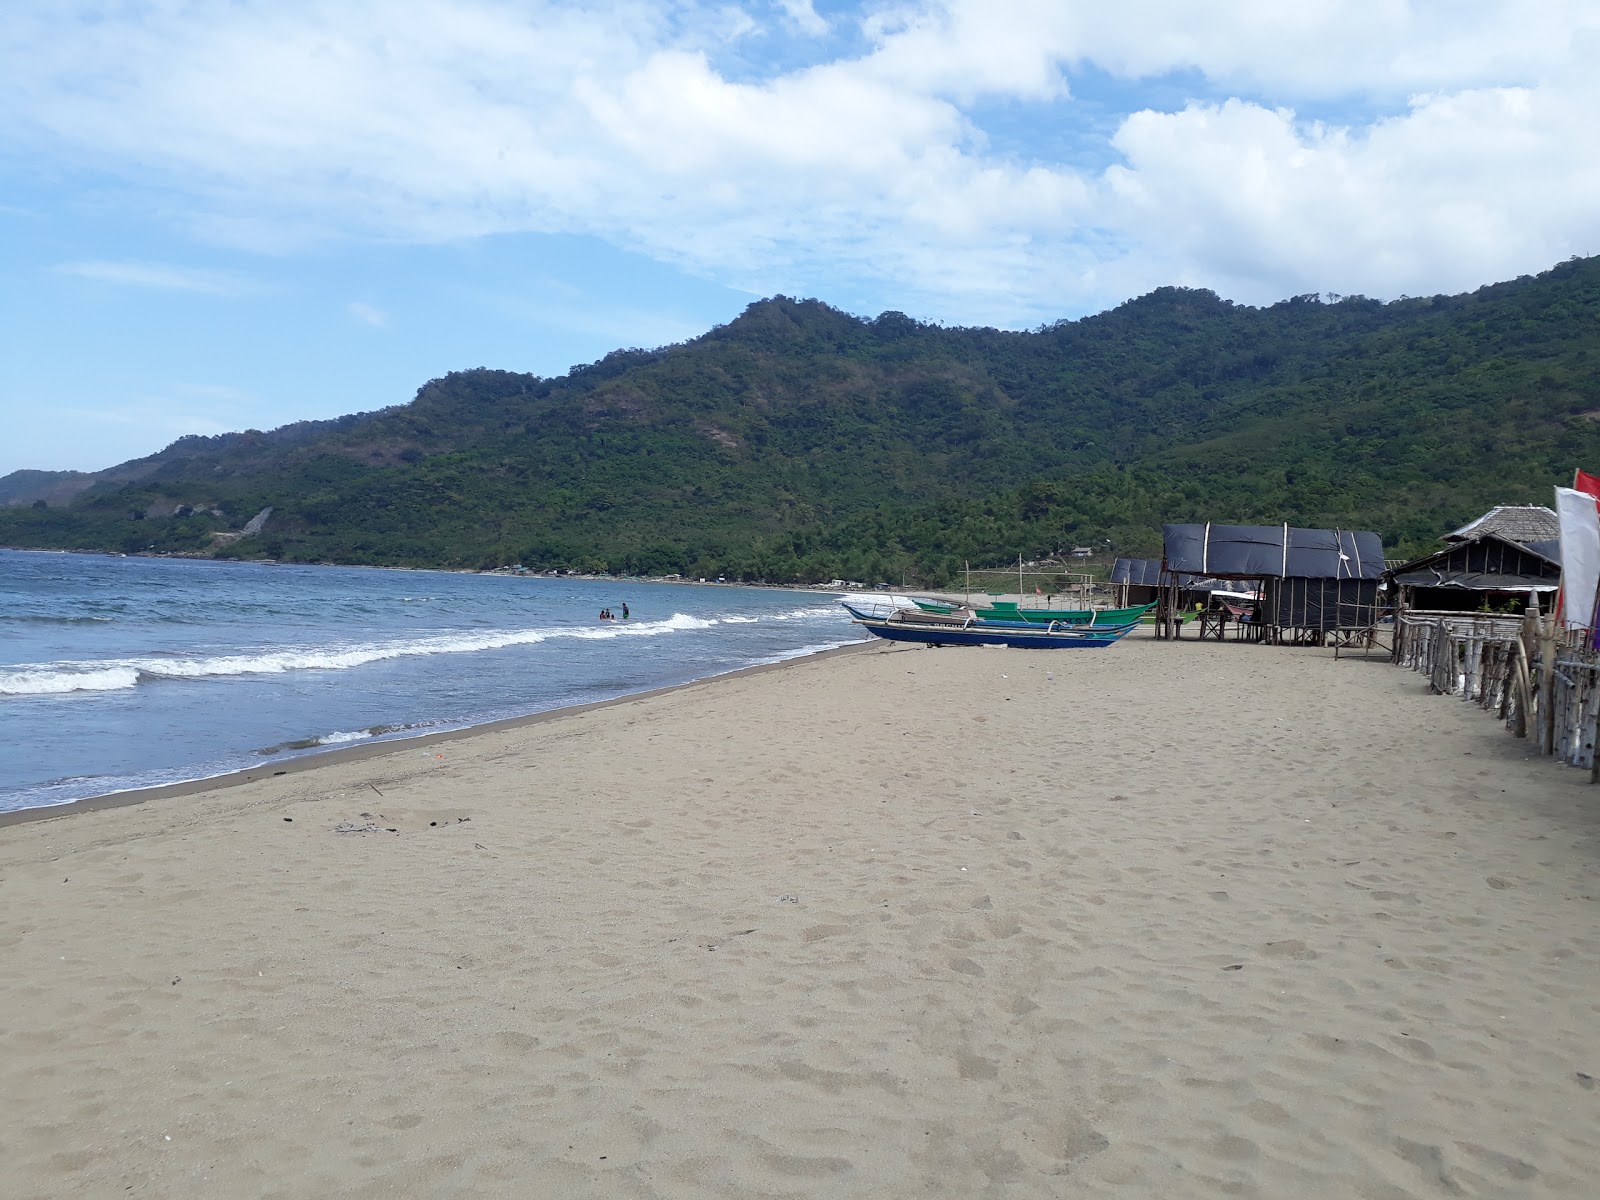 Foto de Patungan beach - lugar popular entre os apreciadores de relaxamento